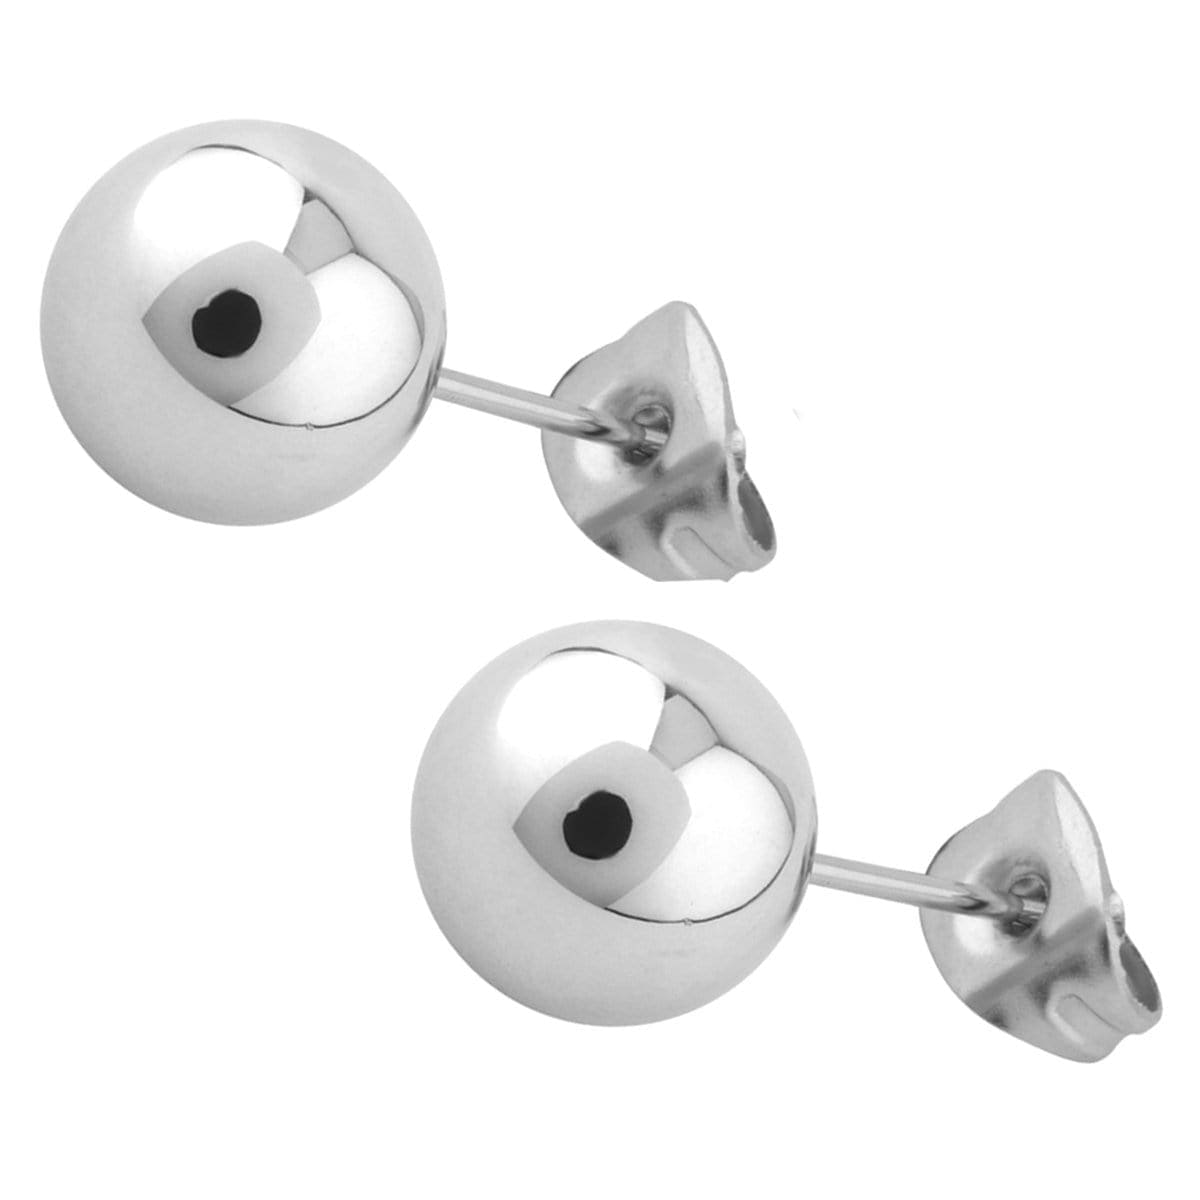 INOX JEWELRY Earrings Silver Tone Stainless Steel Ball Studs